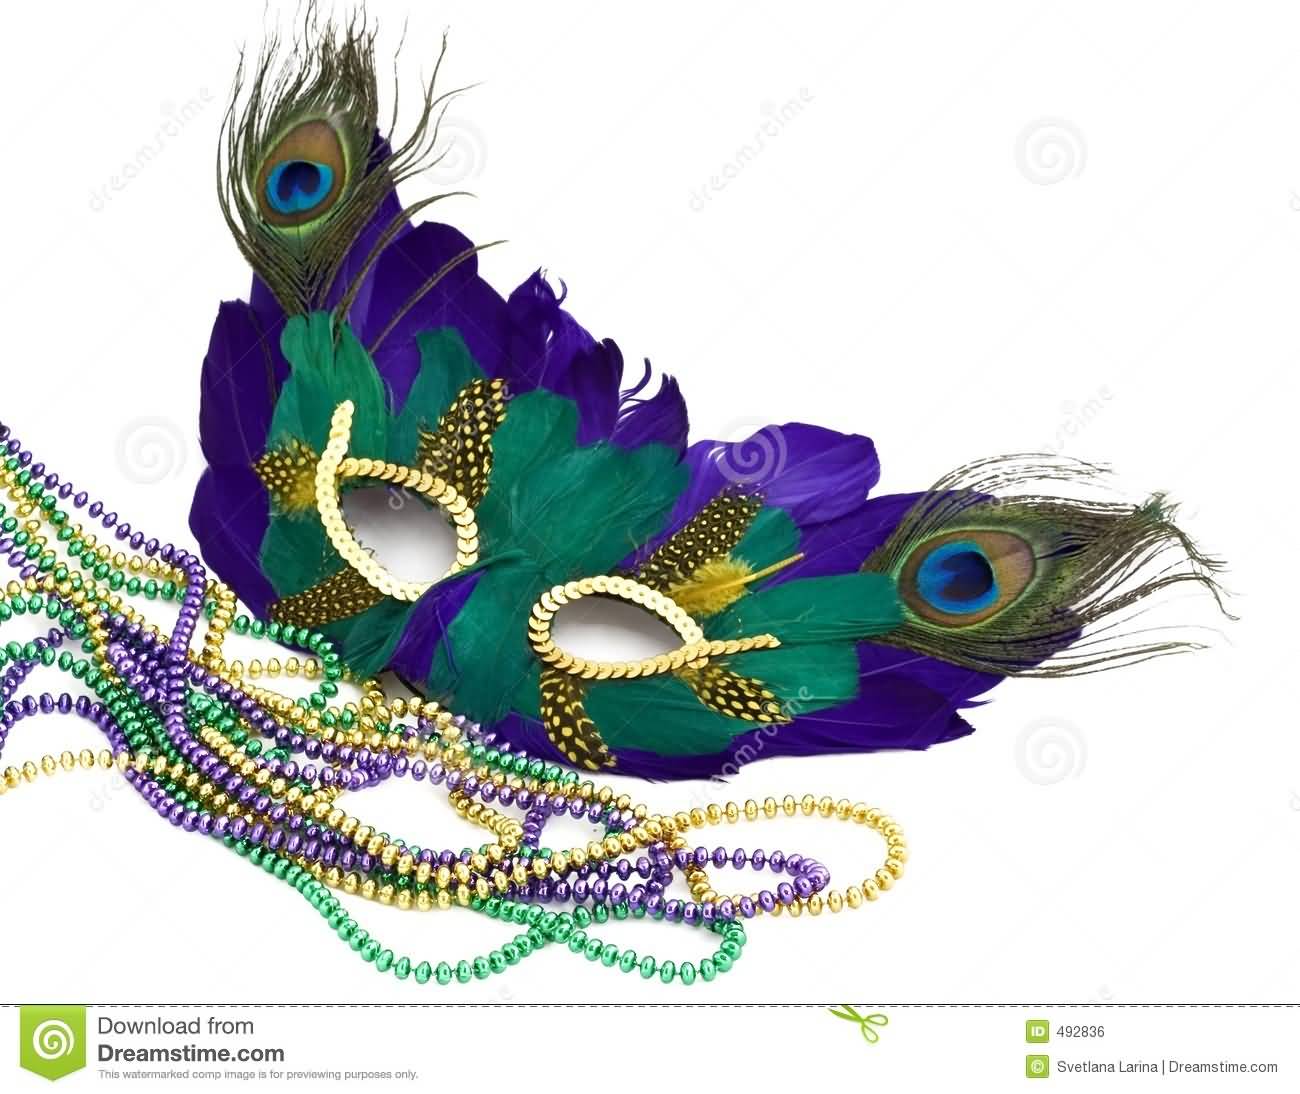 Mardi Gras Mask And Beads